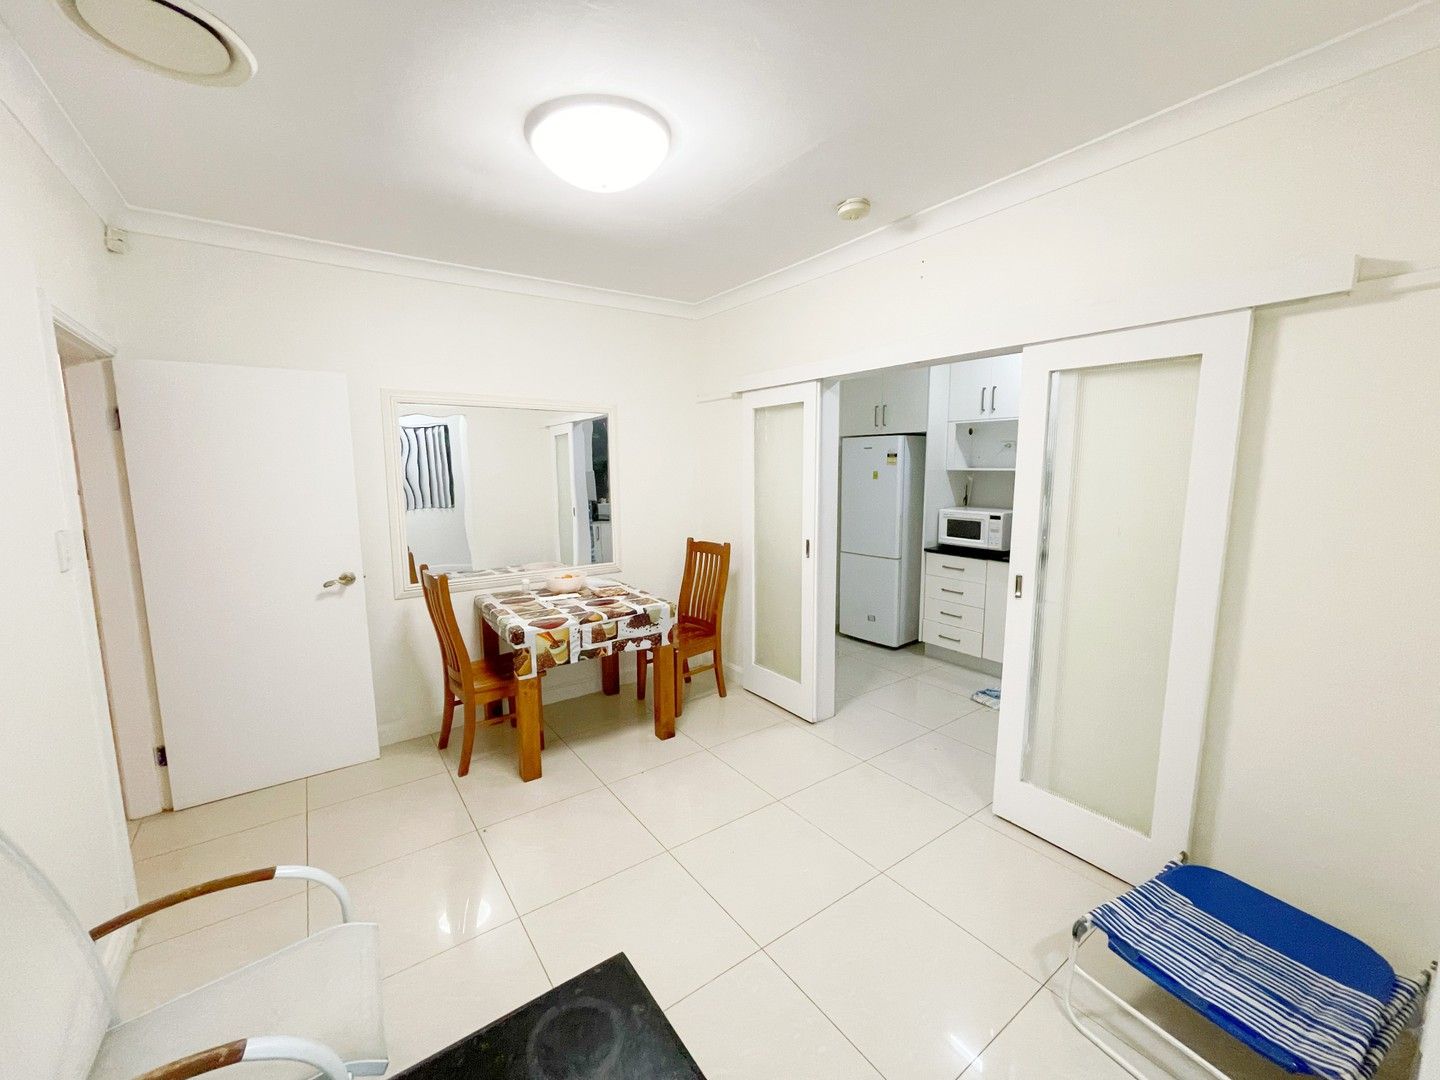 2 bedrooms Apartment / Unit / Flat in 13 Josephine Street RIVERWOOD NSW, 2210